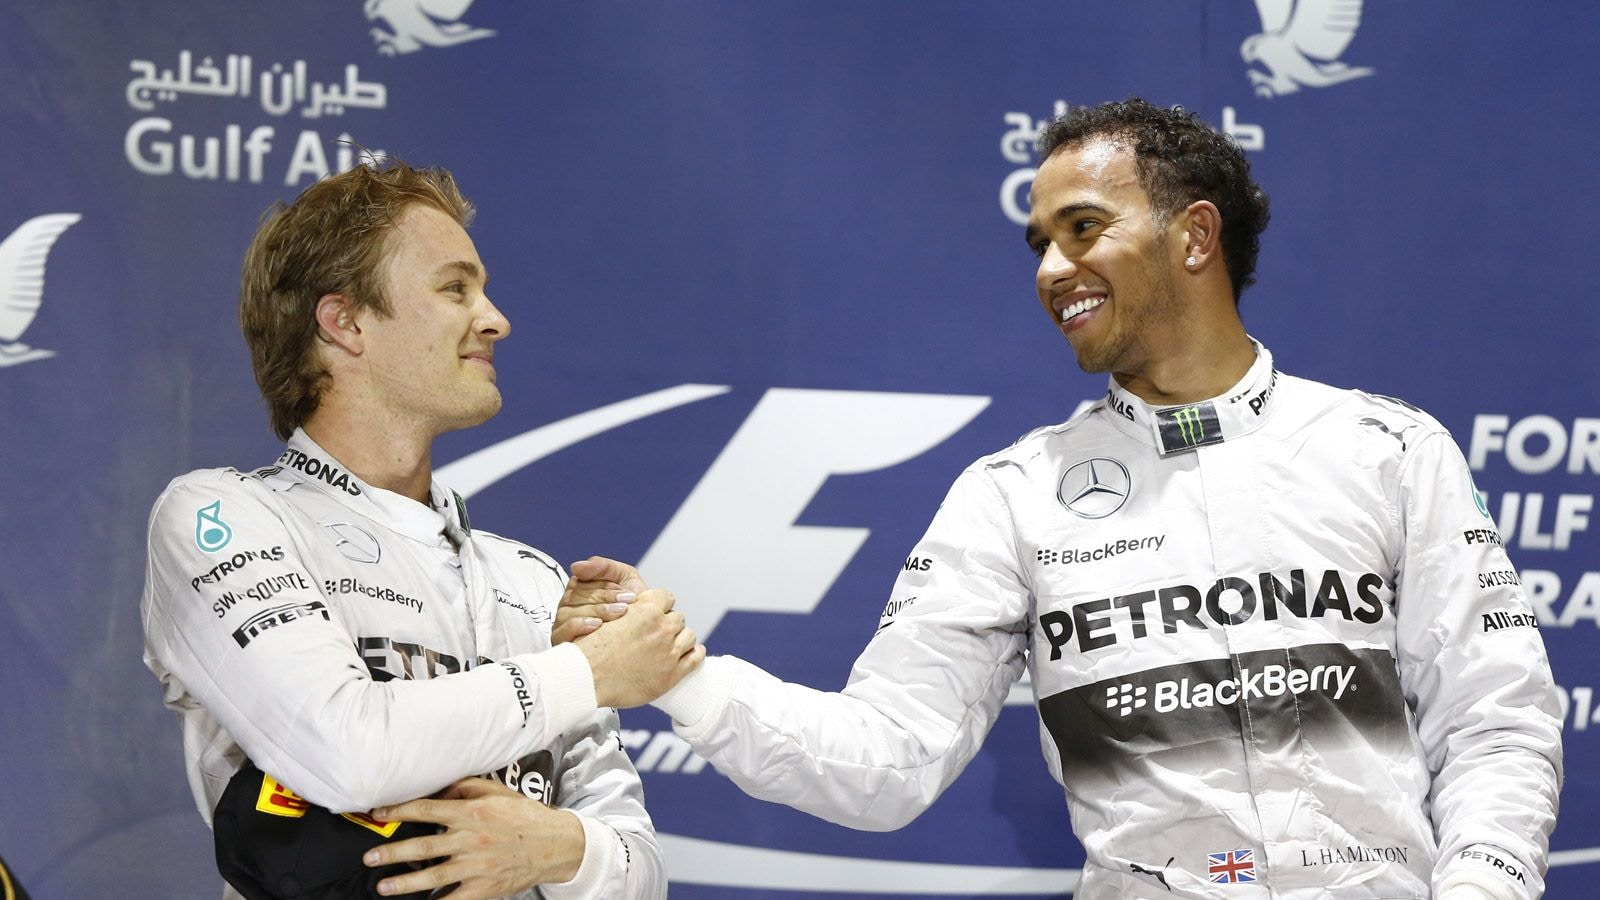 Nico Rosberg and Lewis Hamilton at the 2014 Formula One Bahrain Grand Prix